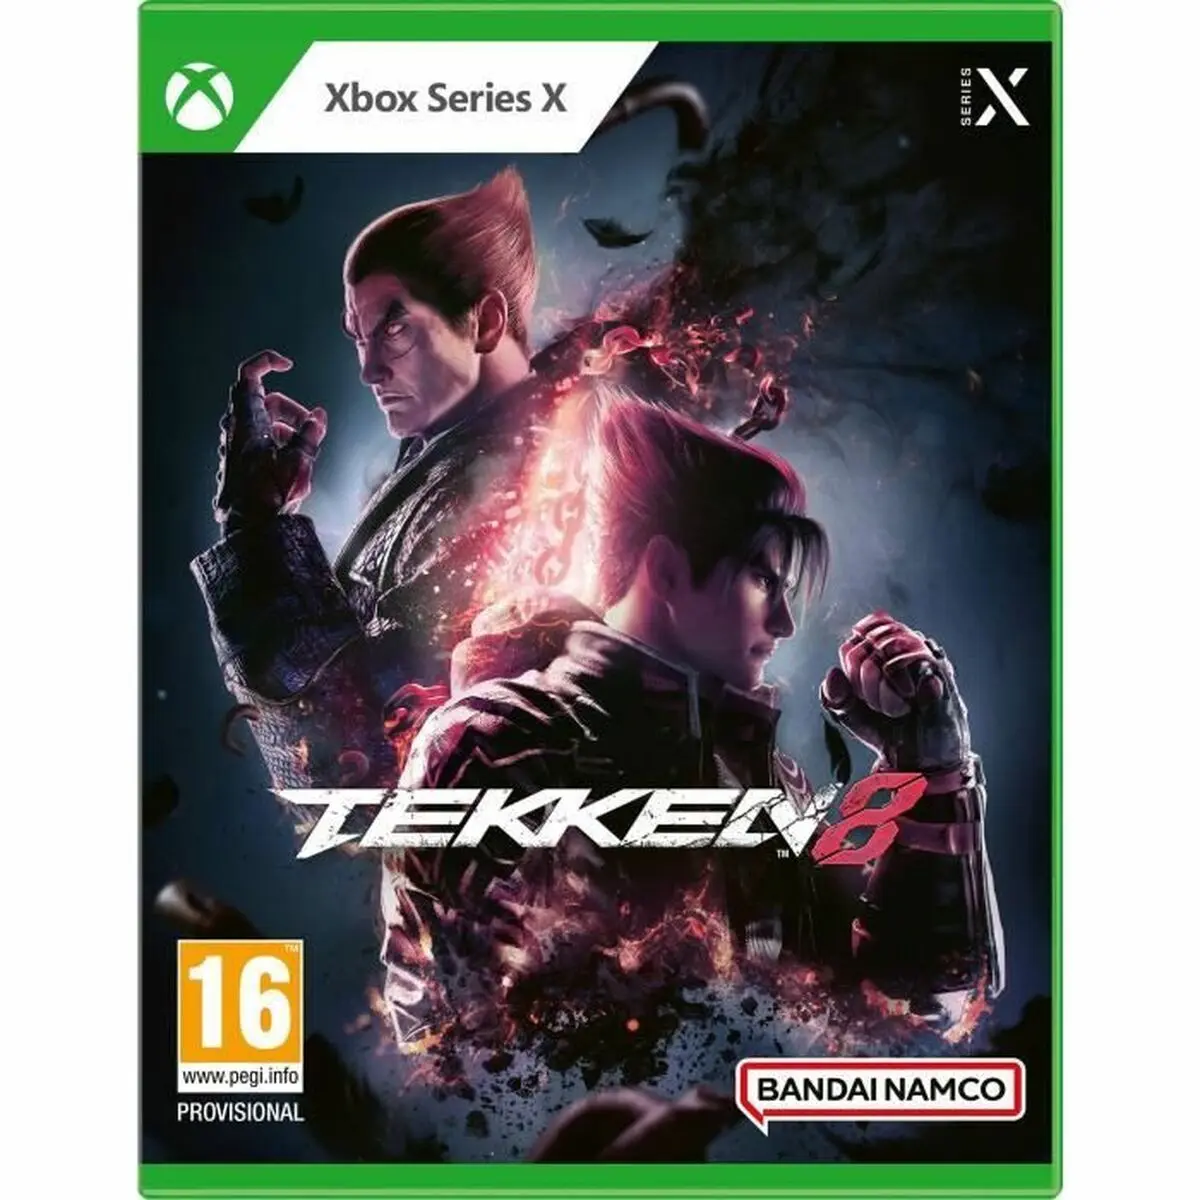 Videogioco per Xbox Series X Bandai Namco Tekken 8 (FR)